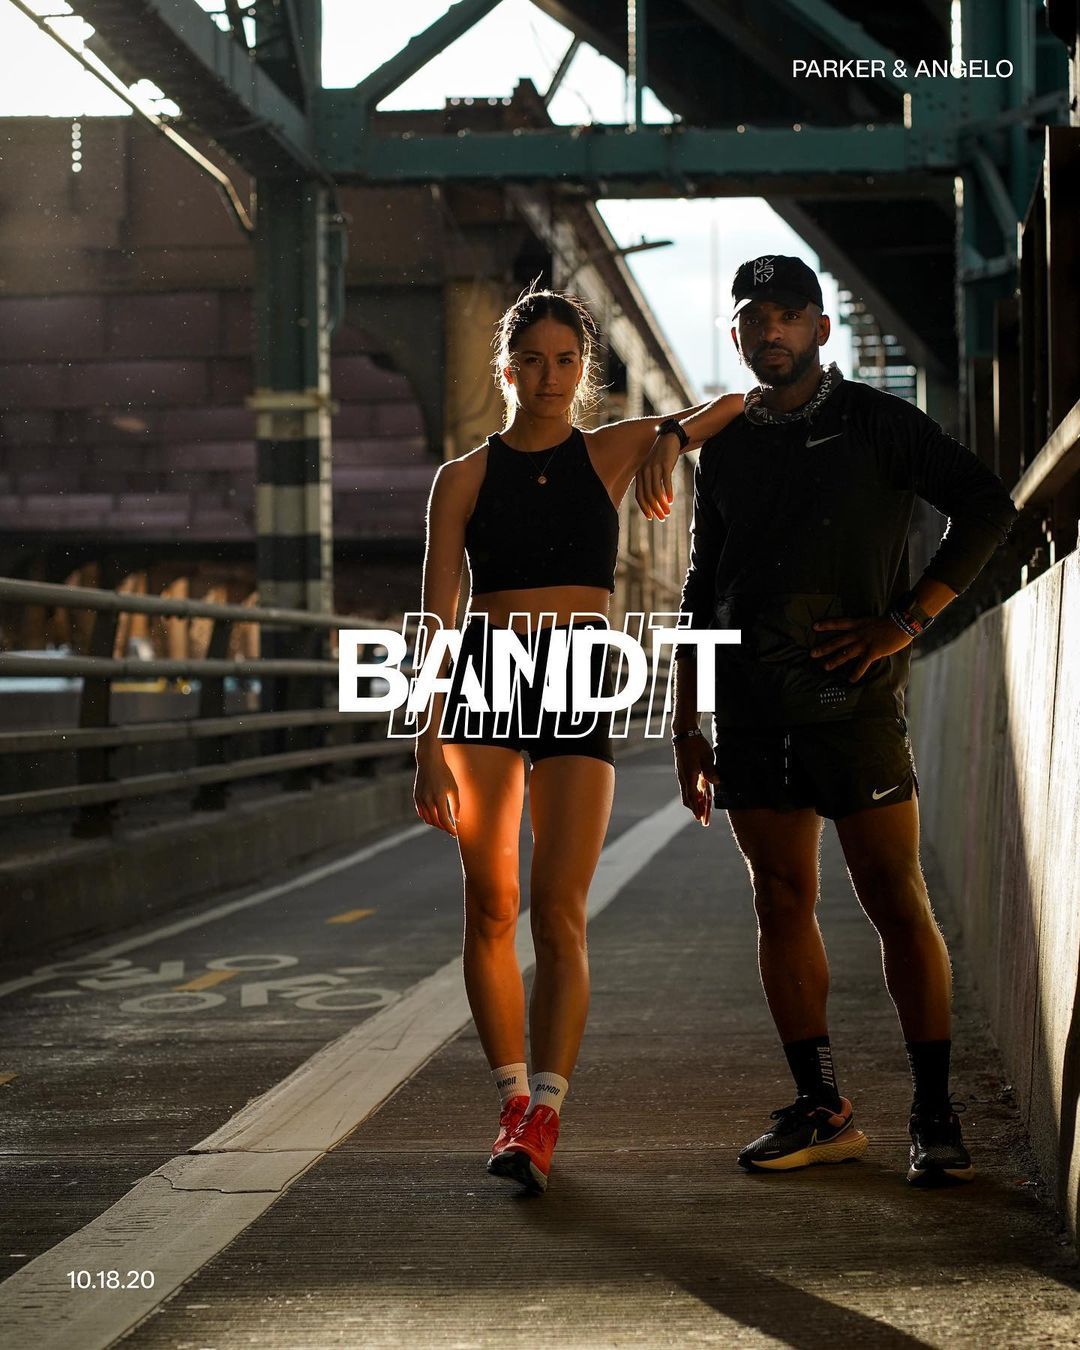 Bandit Running